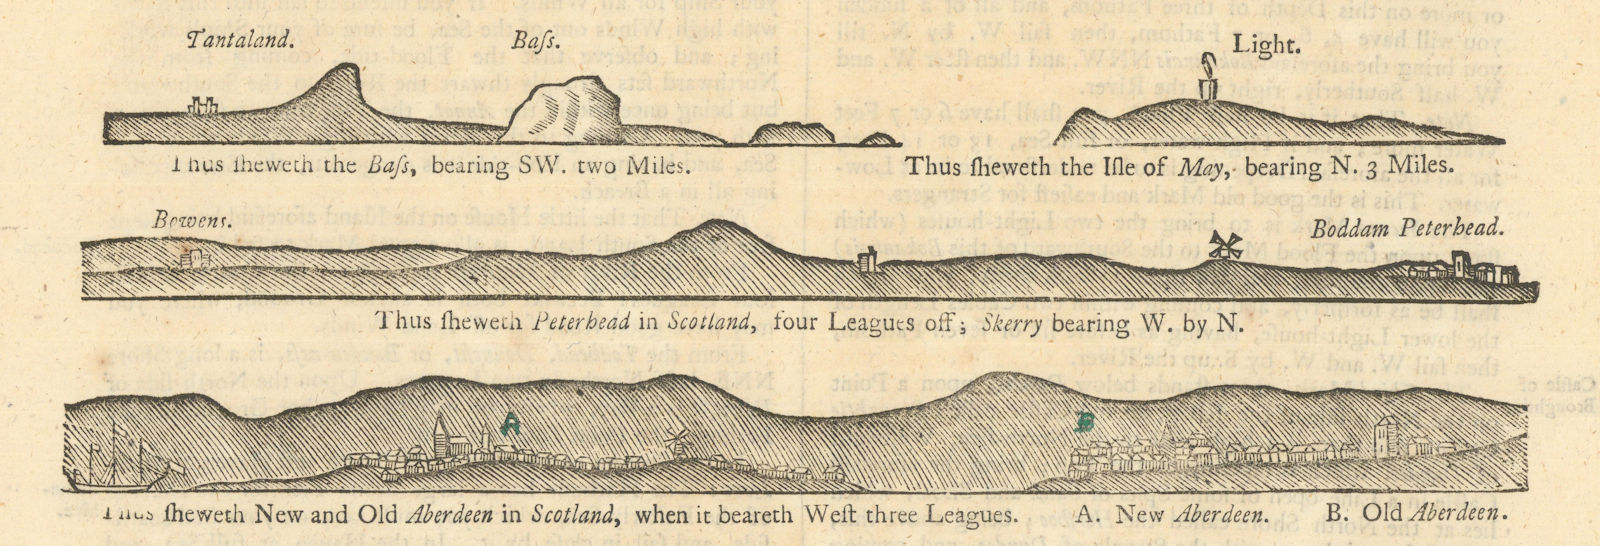 Scotland east coast profile Tantallon Peterhead Aberdeen. MOUNT & PAGE 1758 map